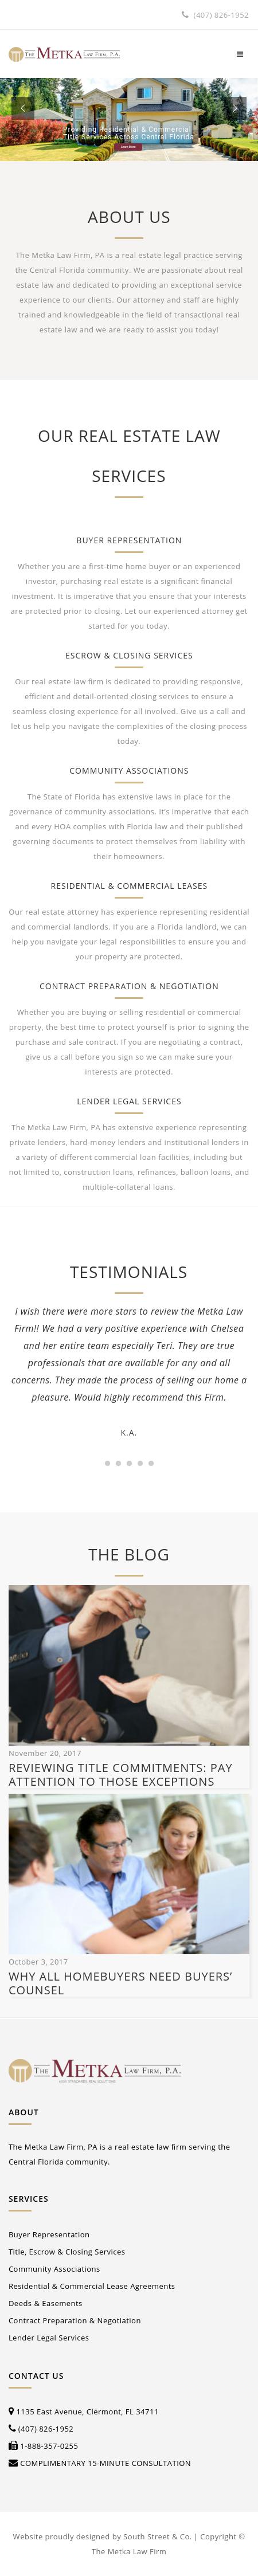 The Metka Law Firm, PA - Orlando FL Lawyers